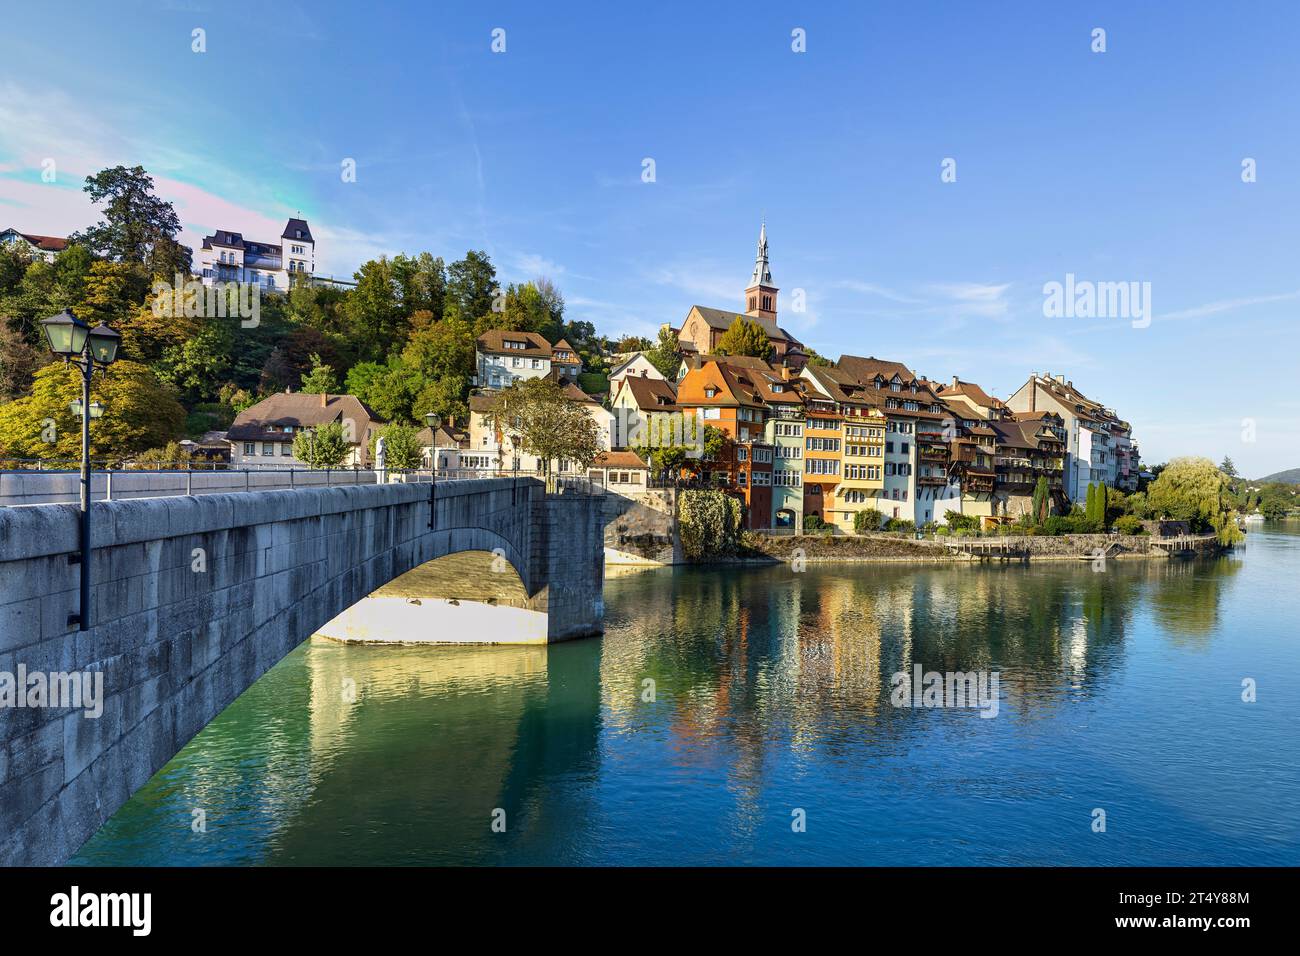 View of Laufenburg, Germany and the Laufen Bridge from the Swiss Laufenburg, Laufenburg District, Aargau, Switzerland Stock Photo